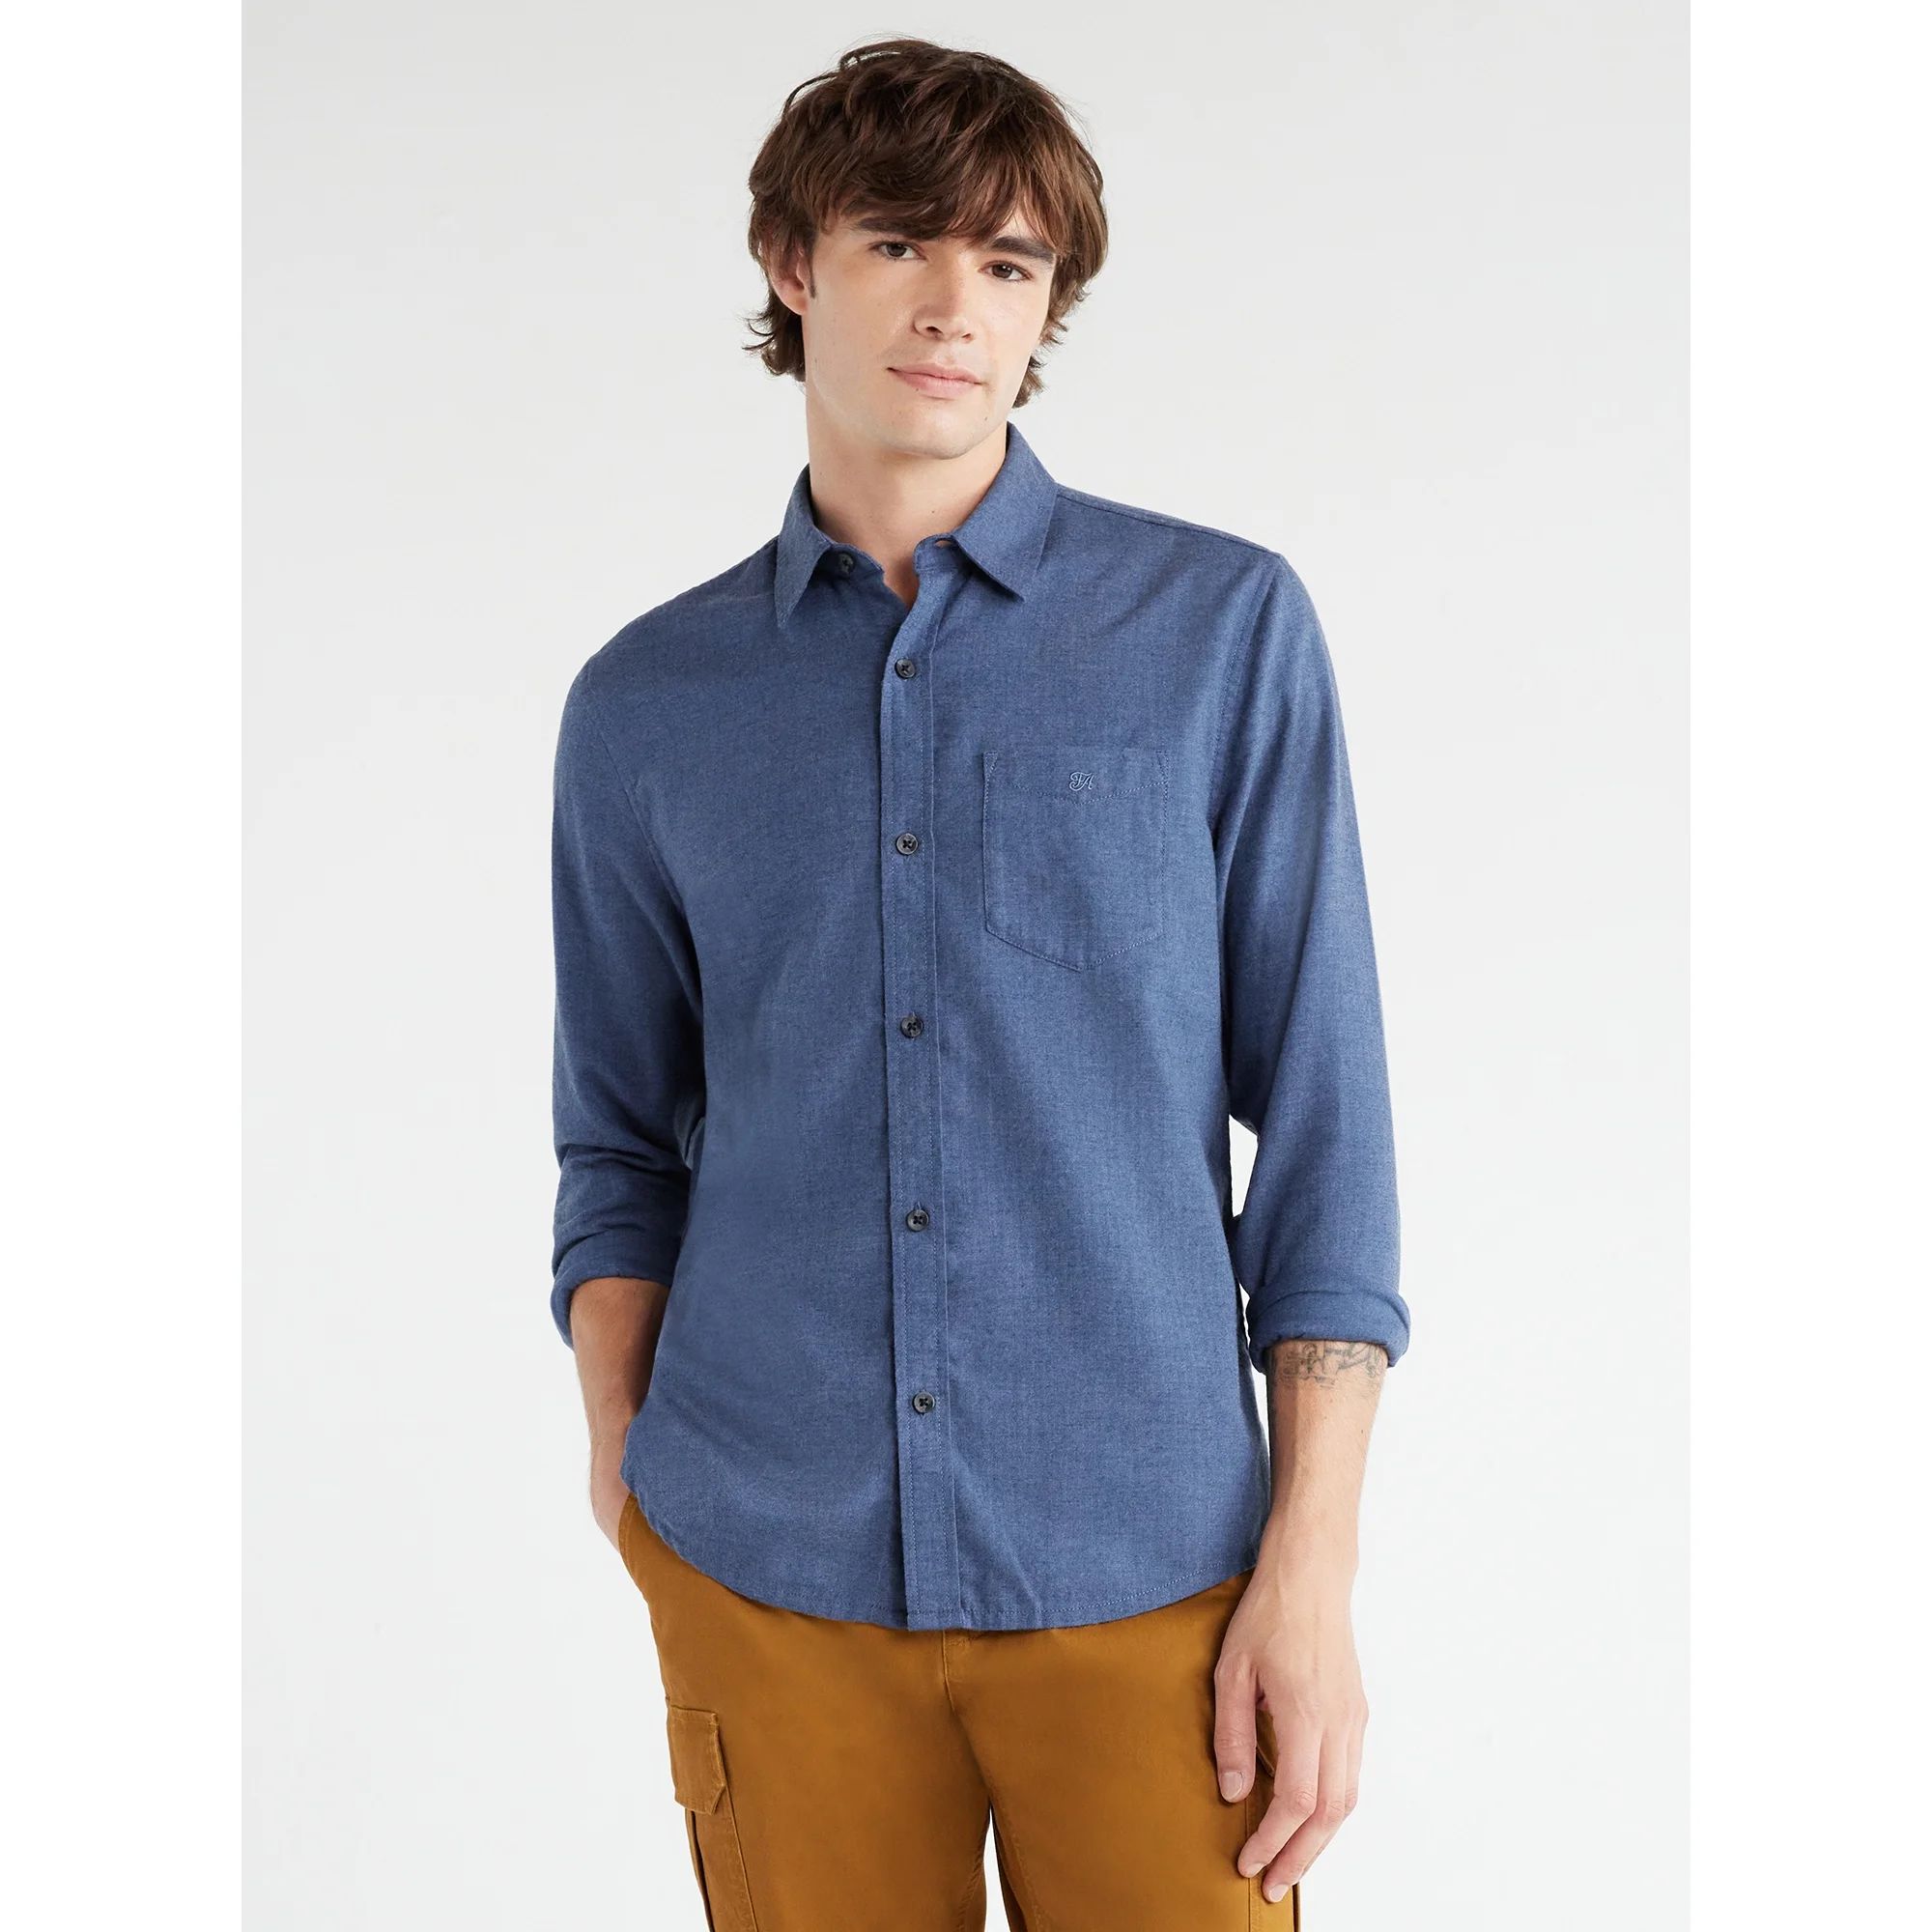 Free Assembly Men's Herringbone Shirt with Long Sleeves, Sizes XS-3XL | Walmart (US)